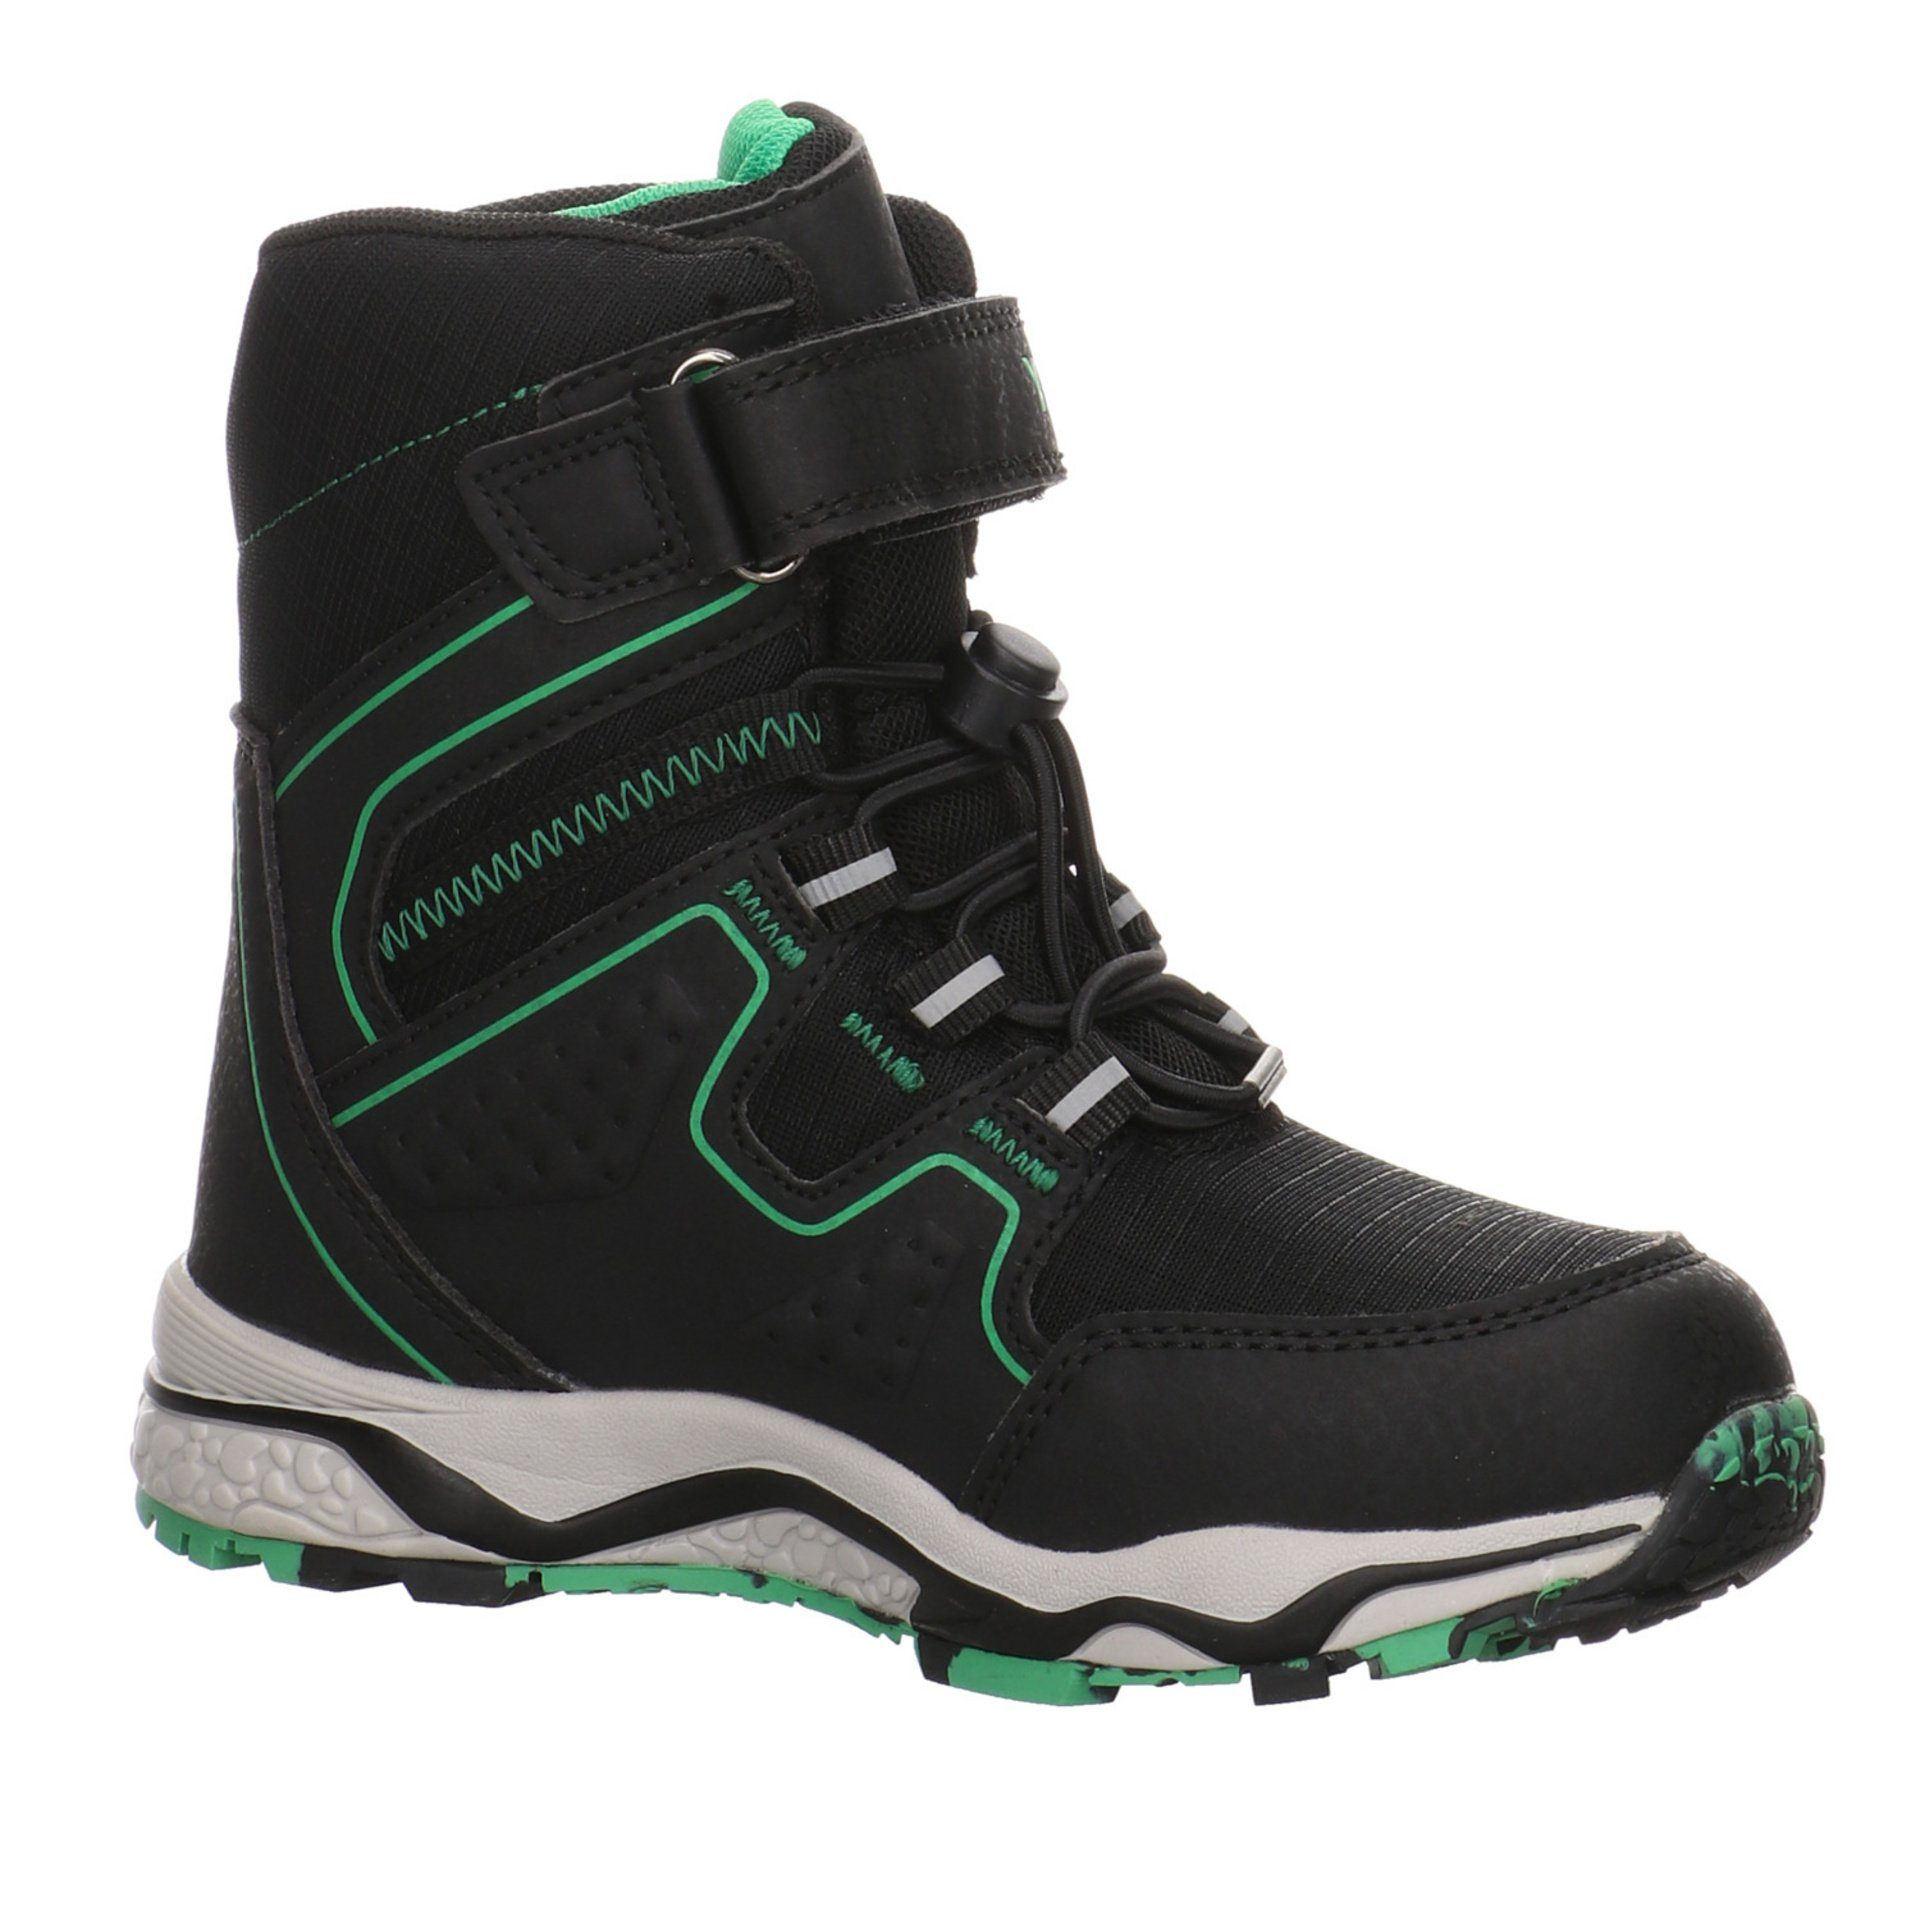 black Stiefel Lucian-Tex Boots green by Stiefel YK-ID Jungen Schuhe Synthetikkombination Salamander Lurchi